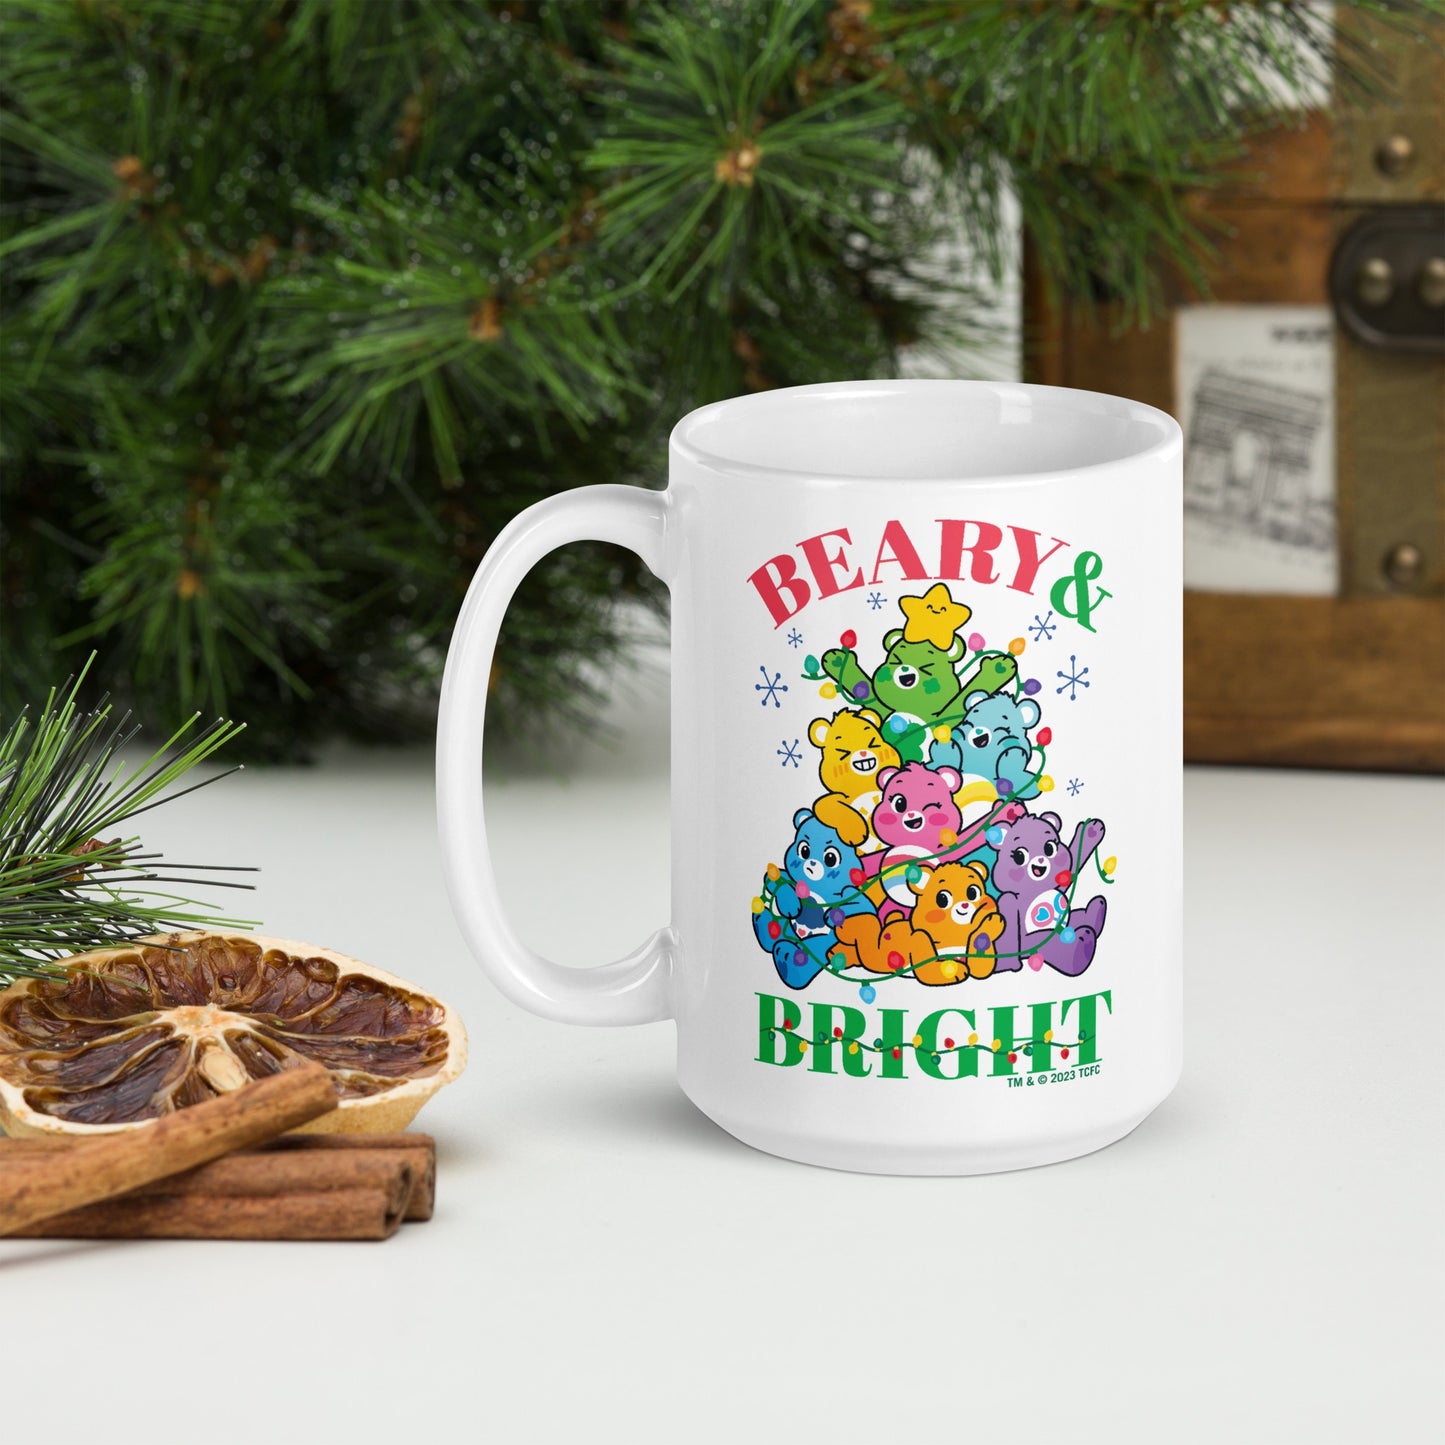 Care Bears Beary & Bright Personalized Mug